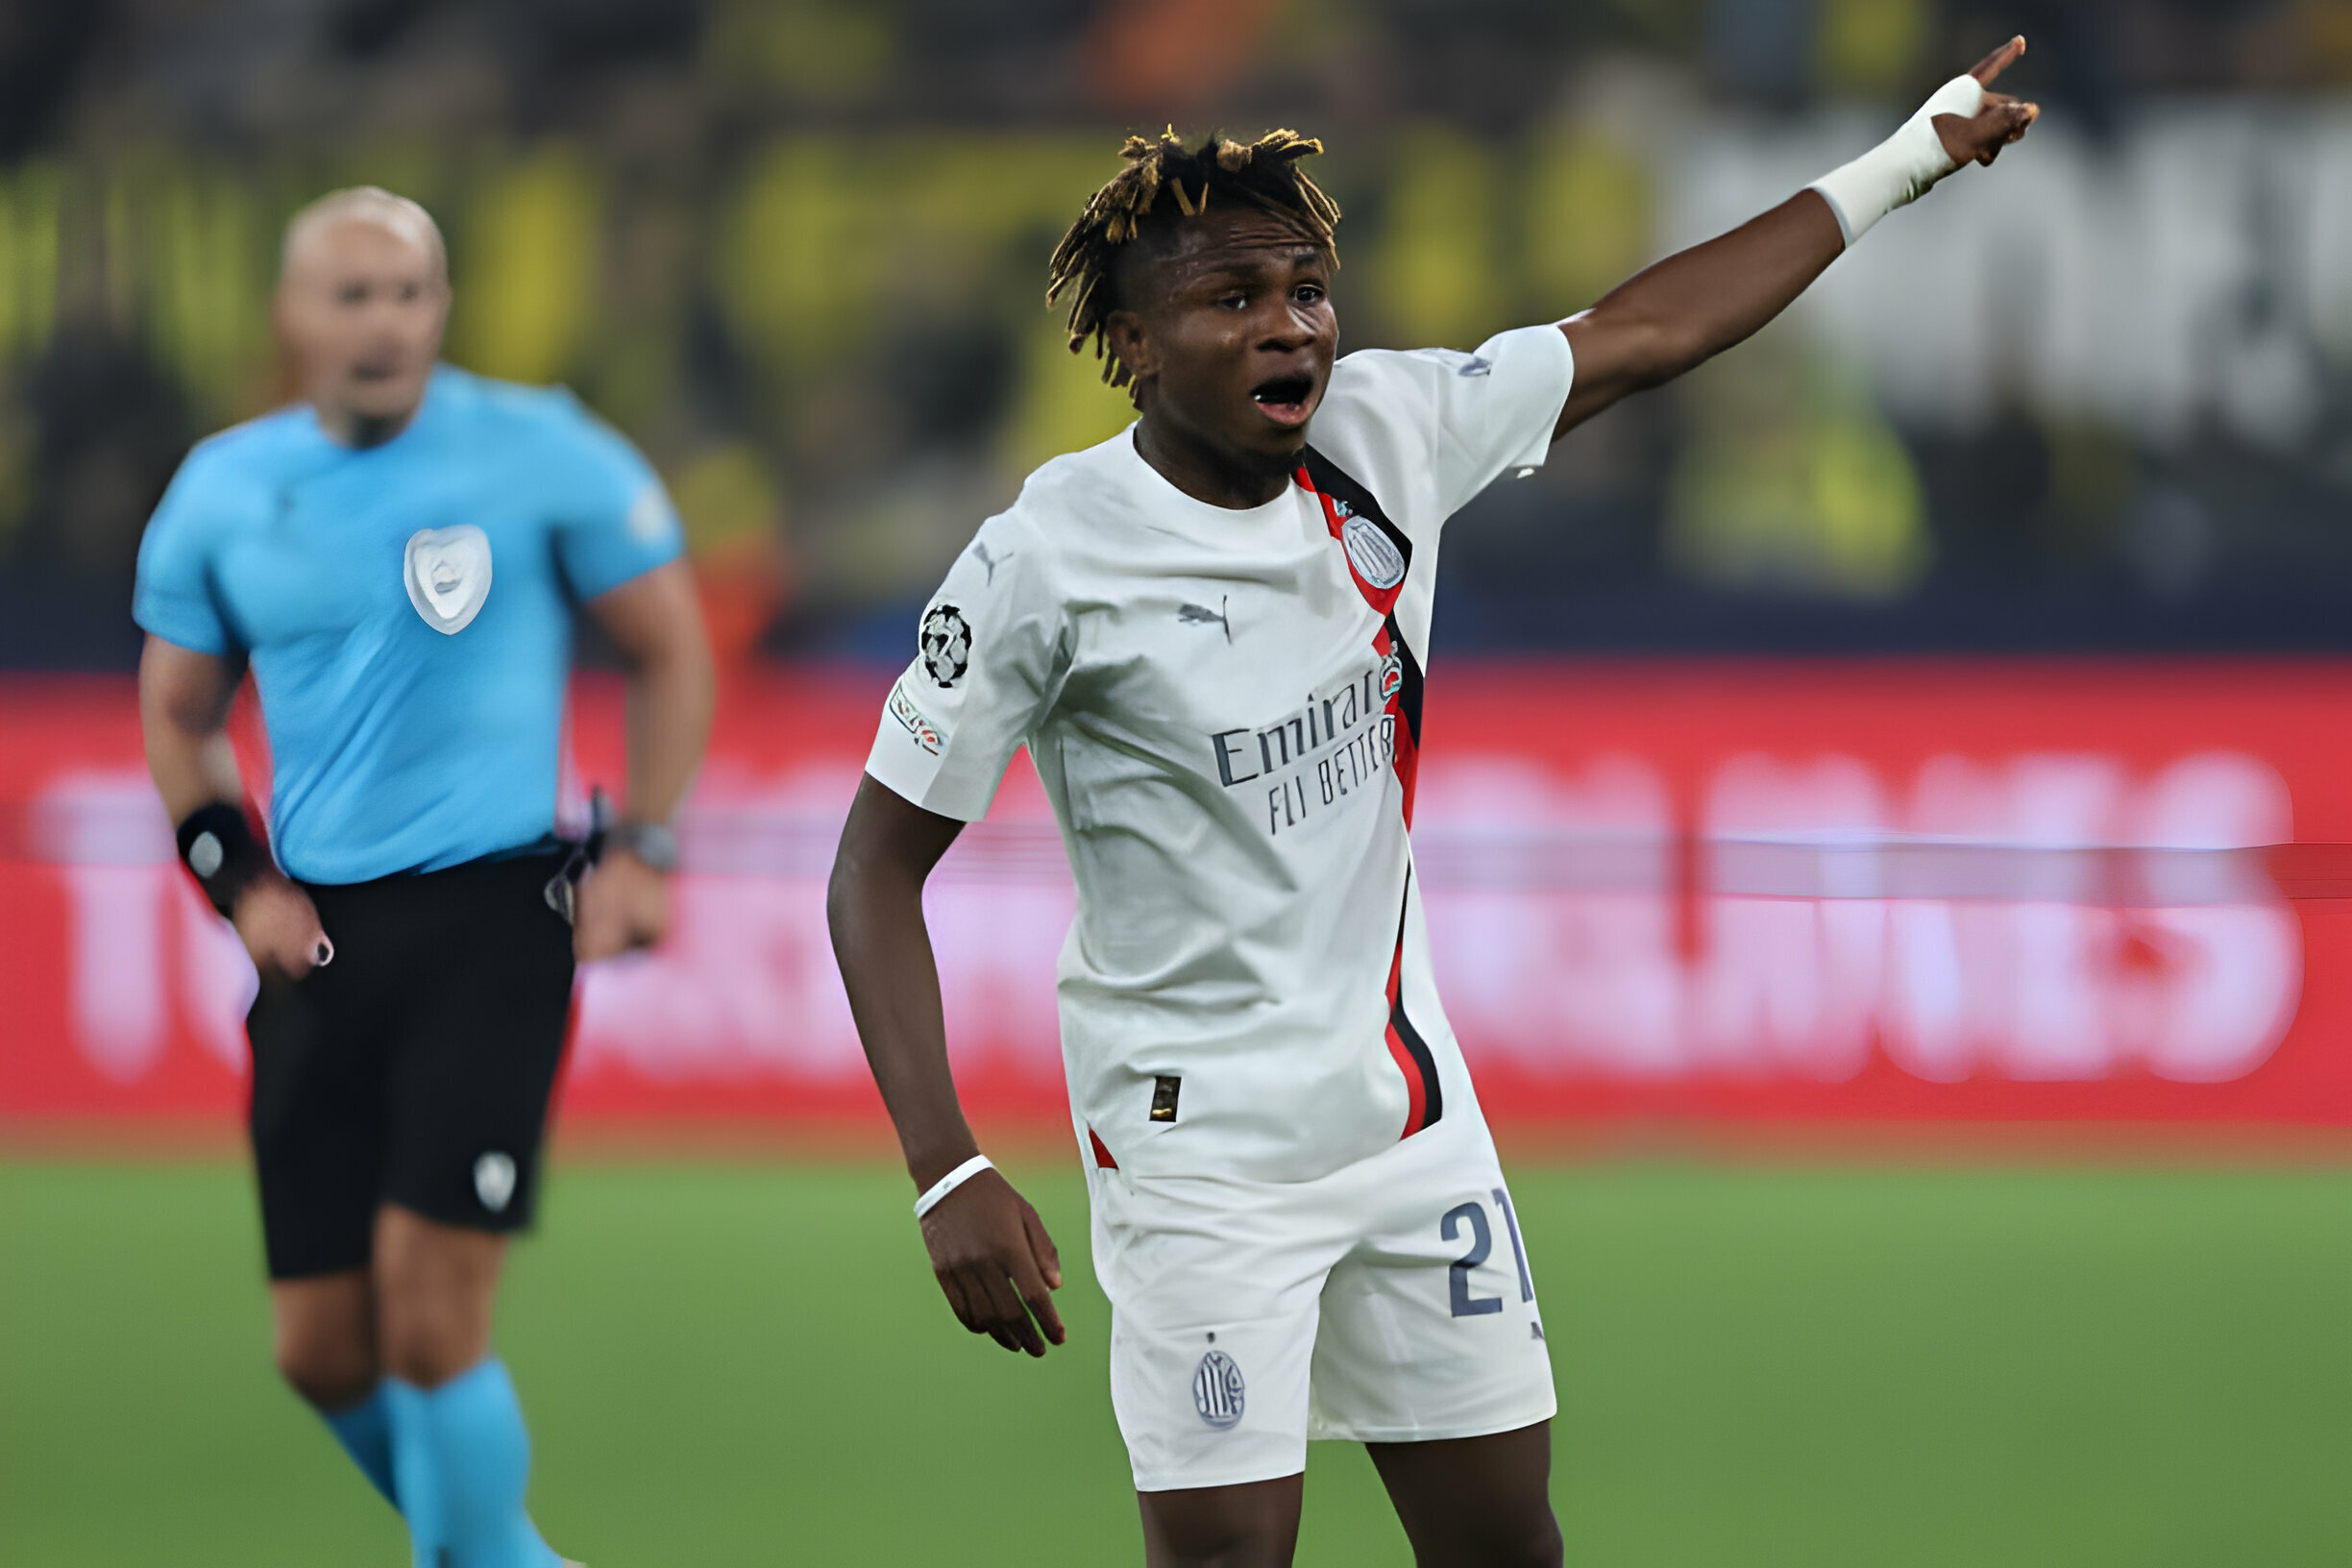 UEL: Samuel Chukwueze second sub as Milan advance